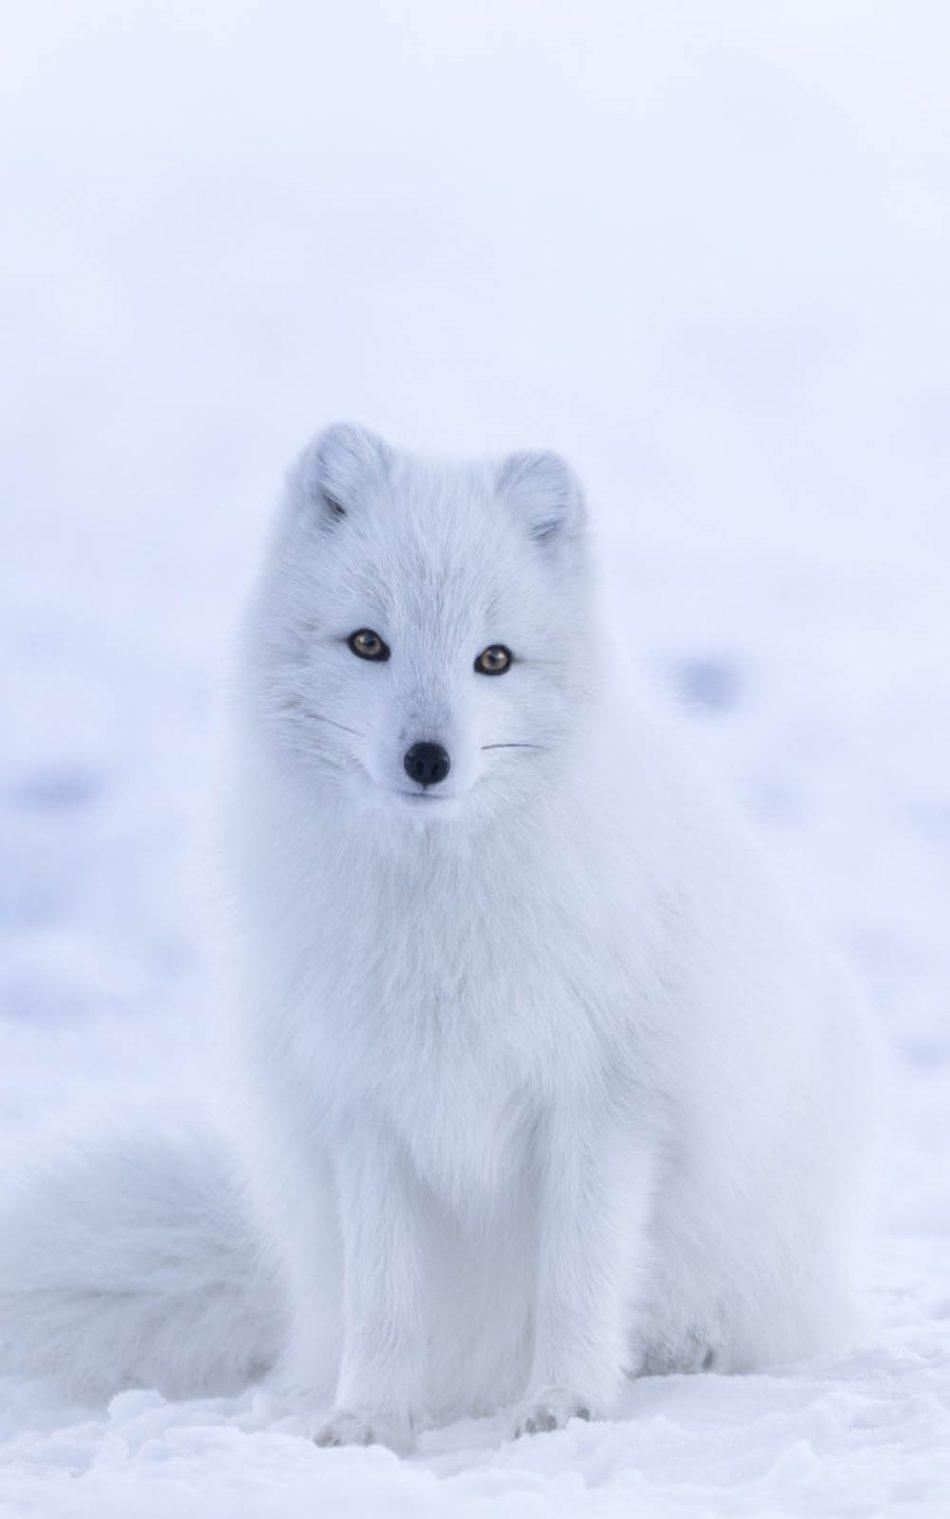 Cute White Arctic Fox 4k Ultra HD Mobile Wallpaper